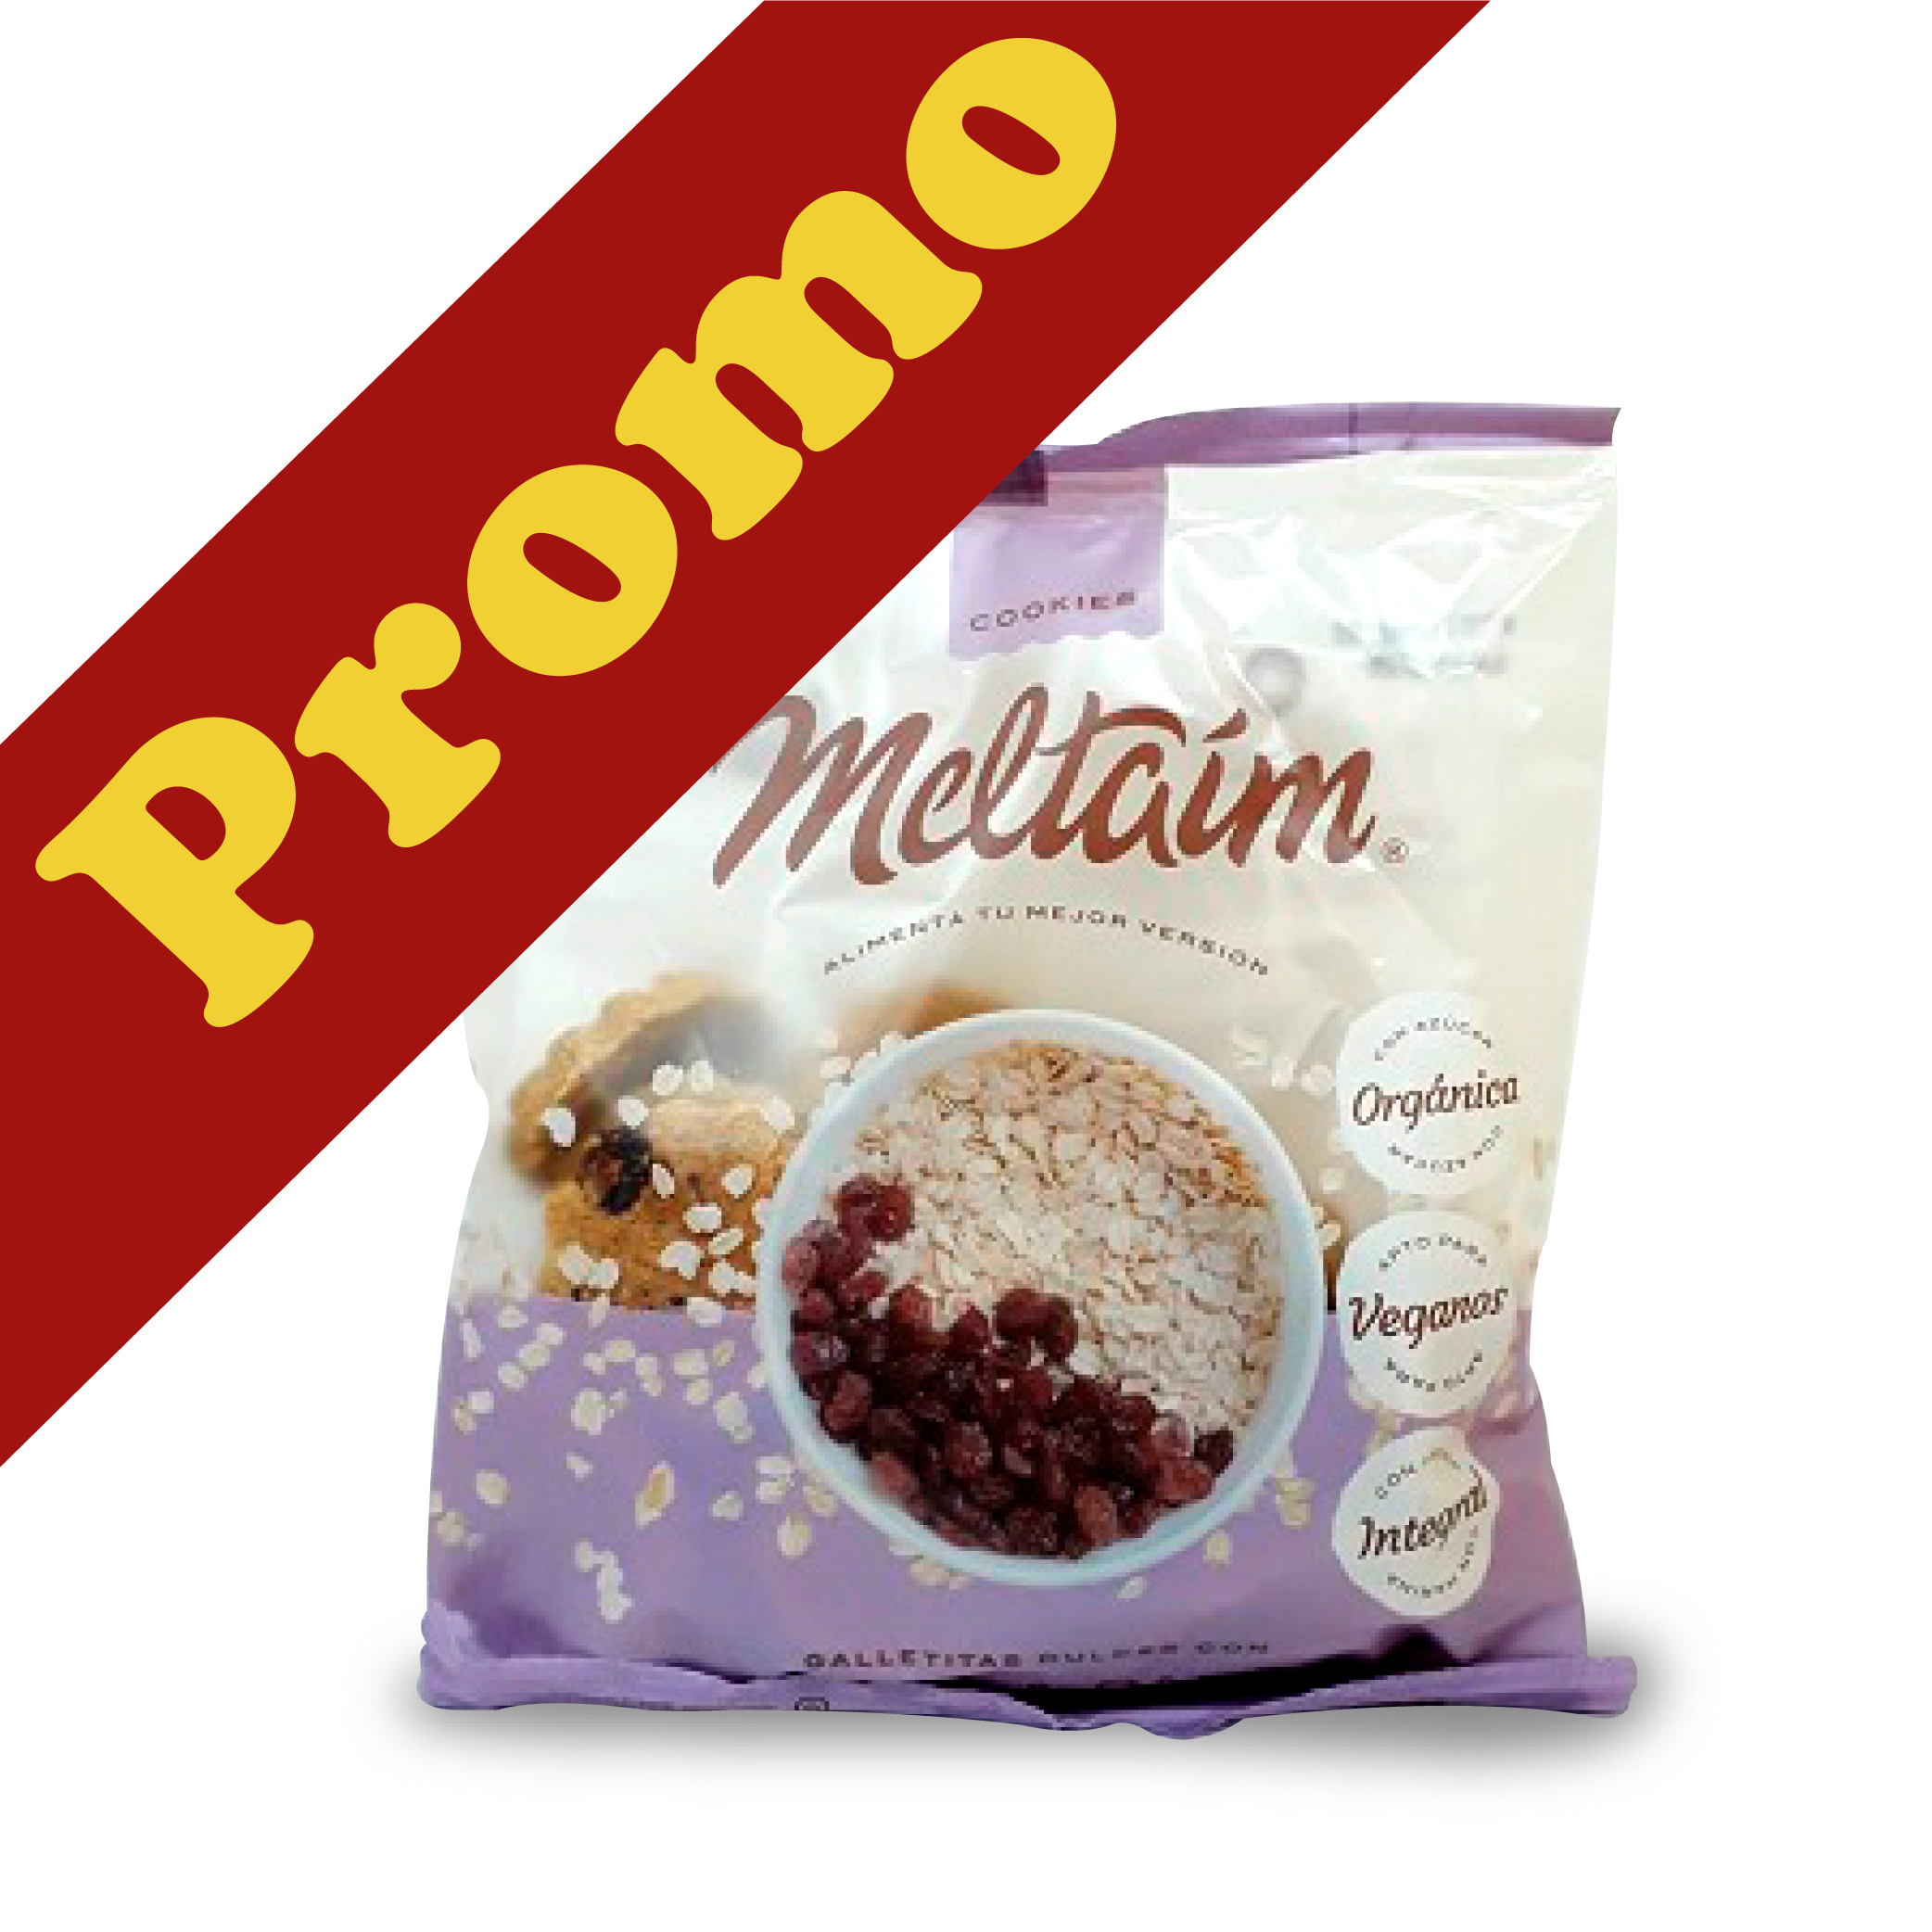 Meltaim - Cookies Avena y Pasas Vengano PROMO  4 x 150 gr